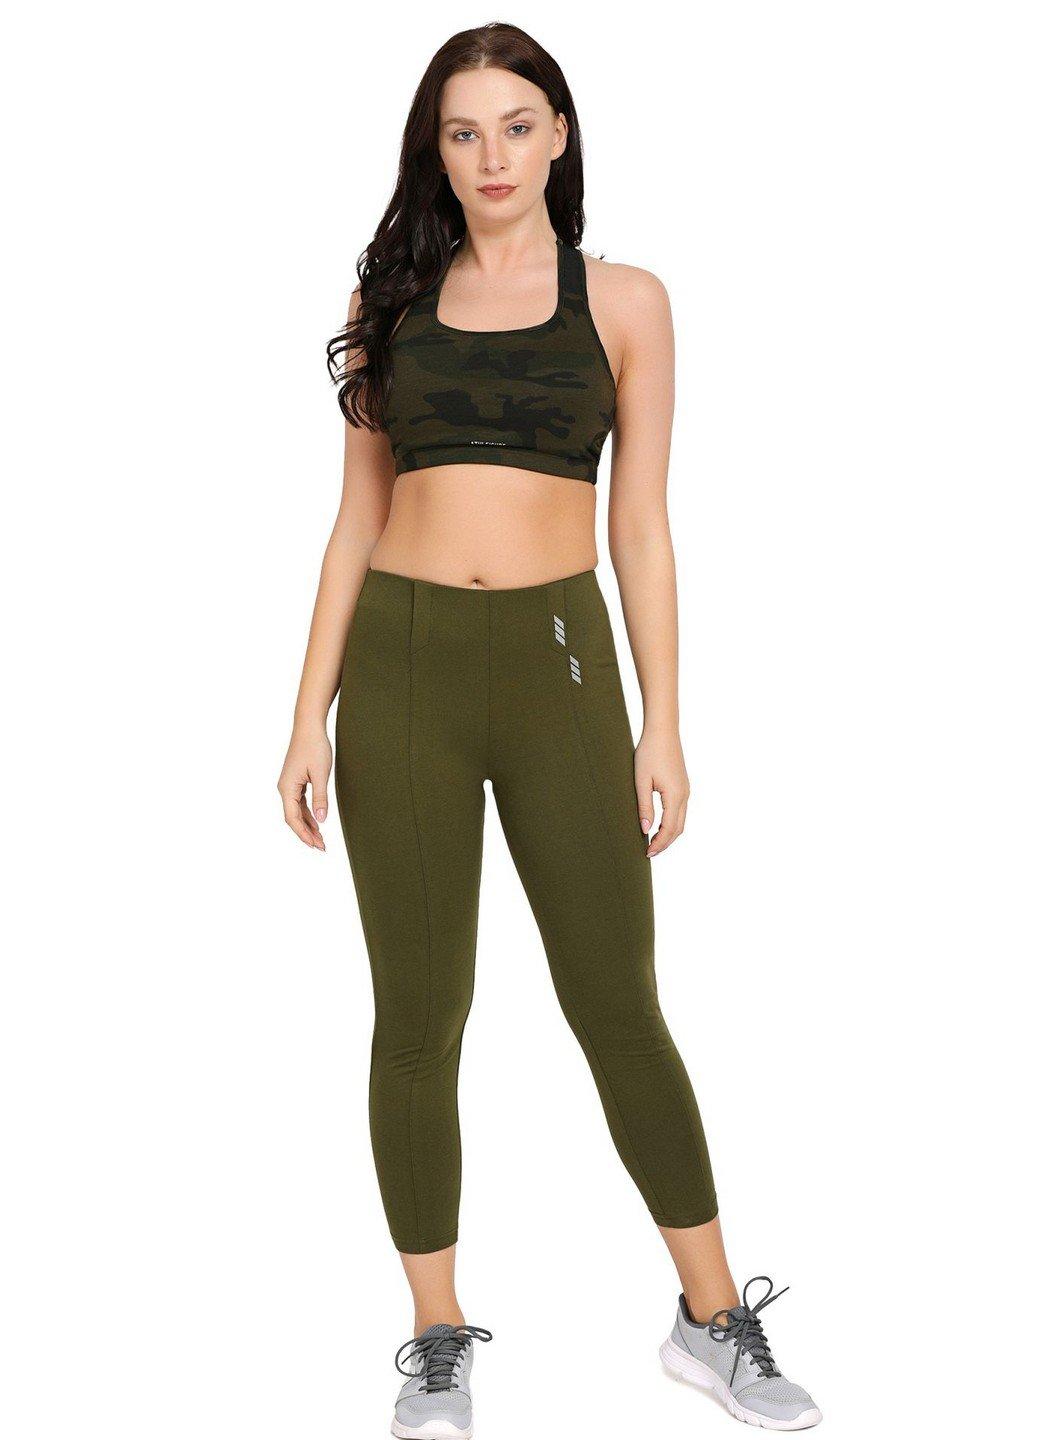 Lovable Green Cotton Ankle Length Tights Yoga Pants - Stilento